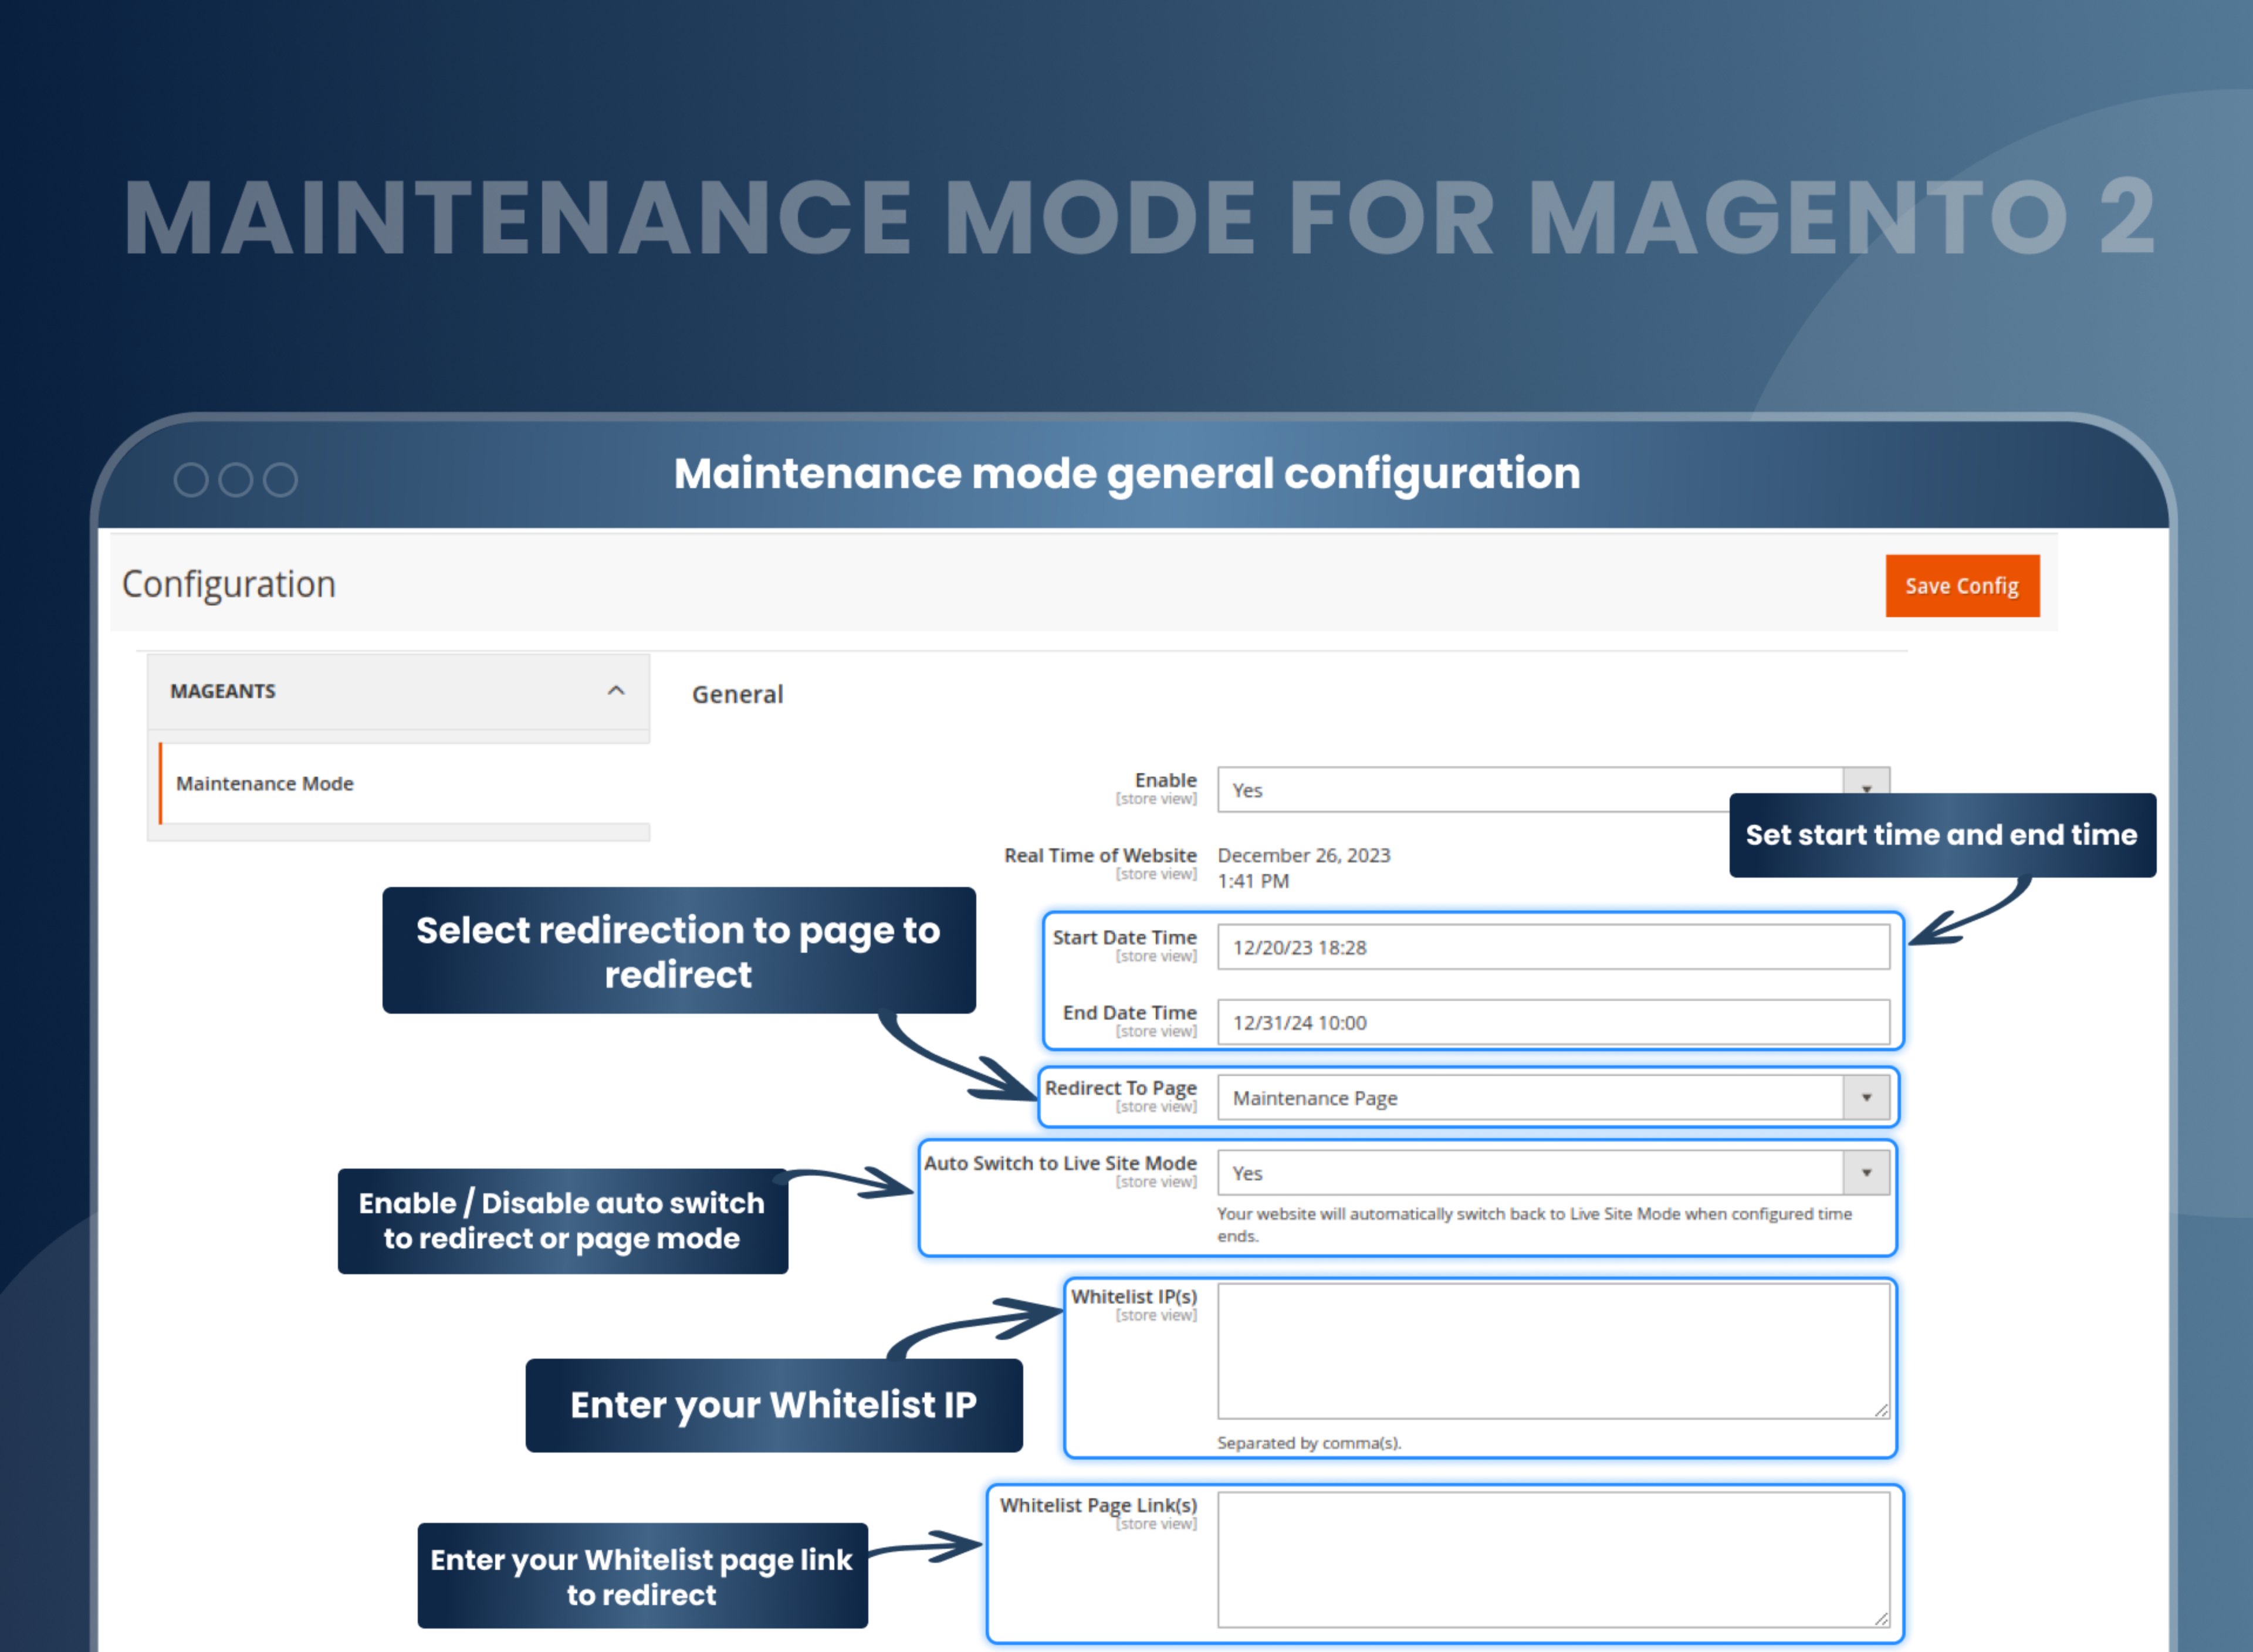 Maintenance mode general configuration